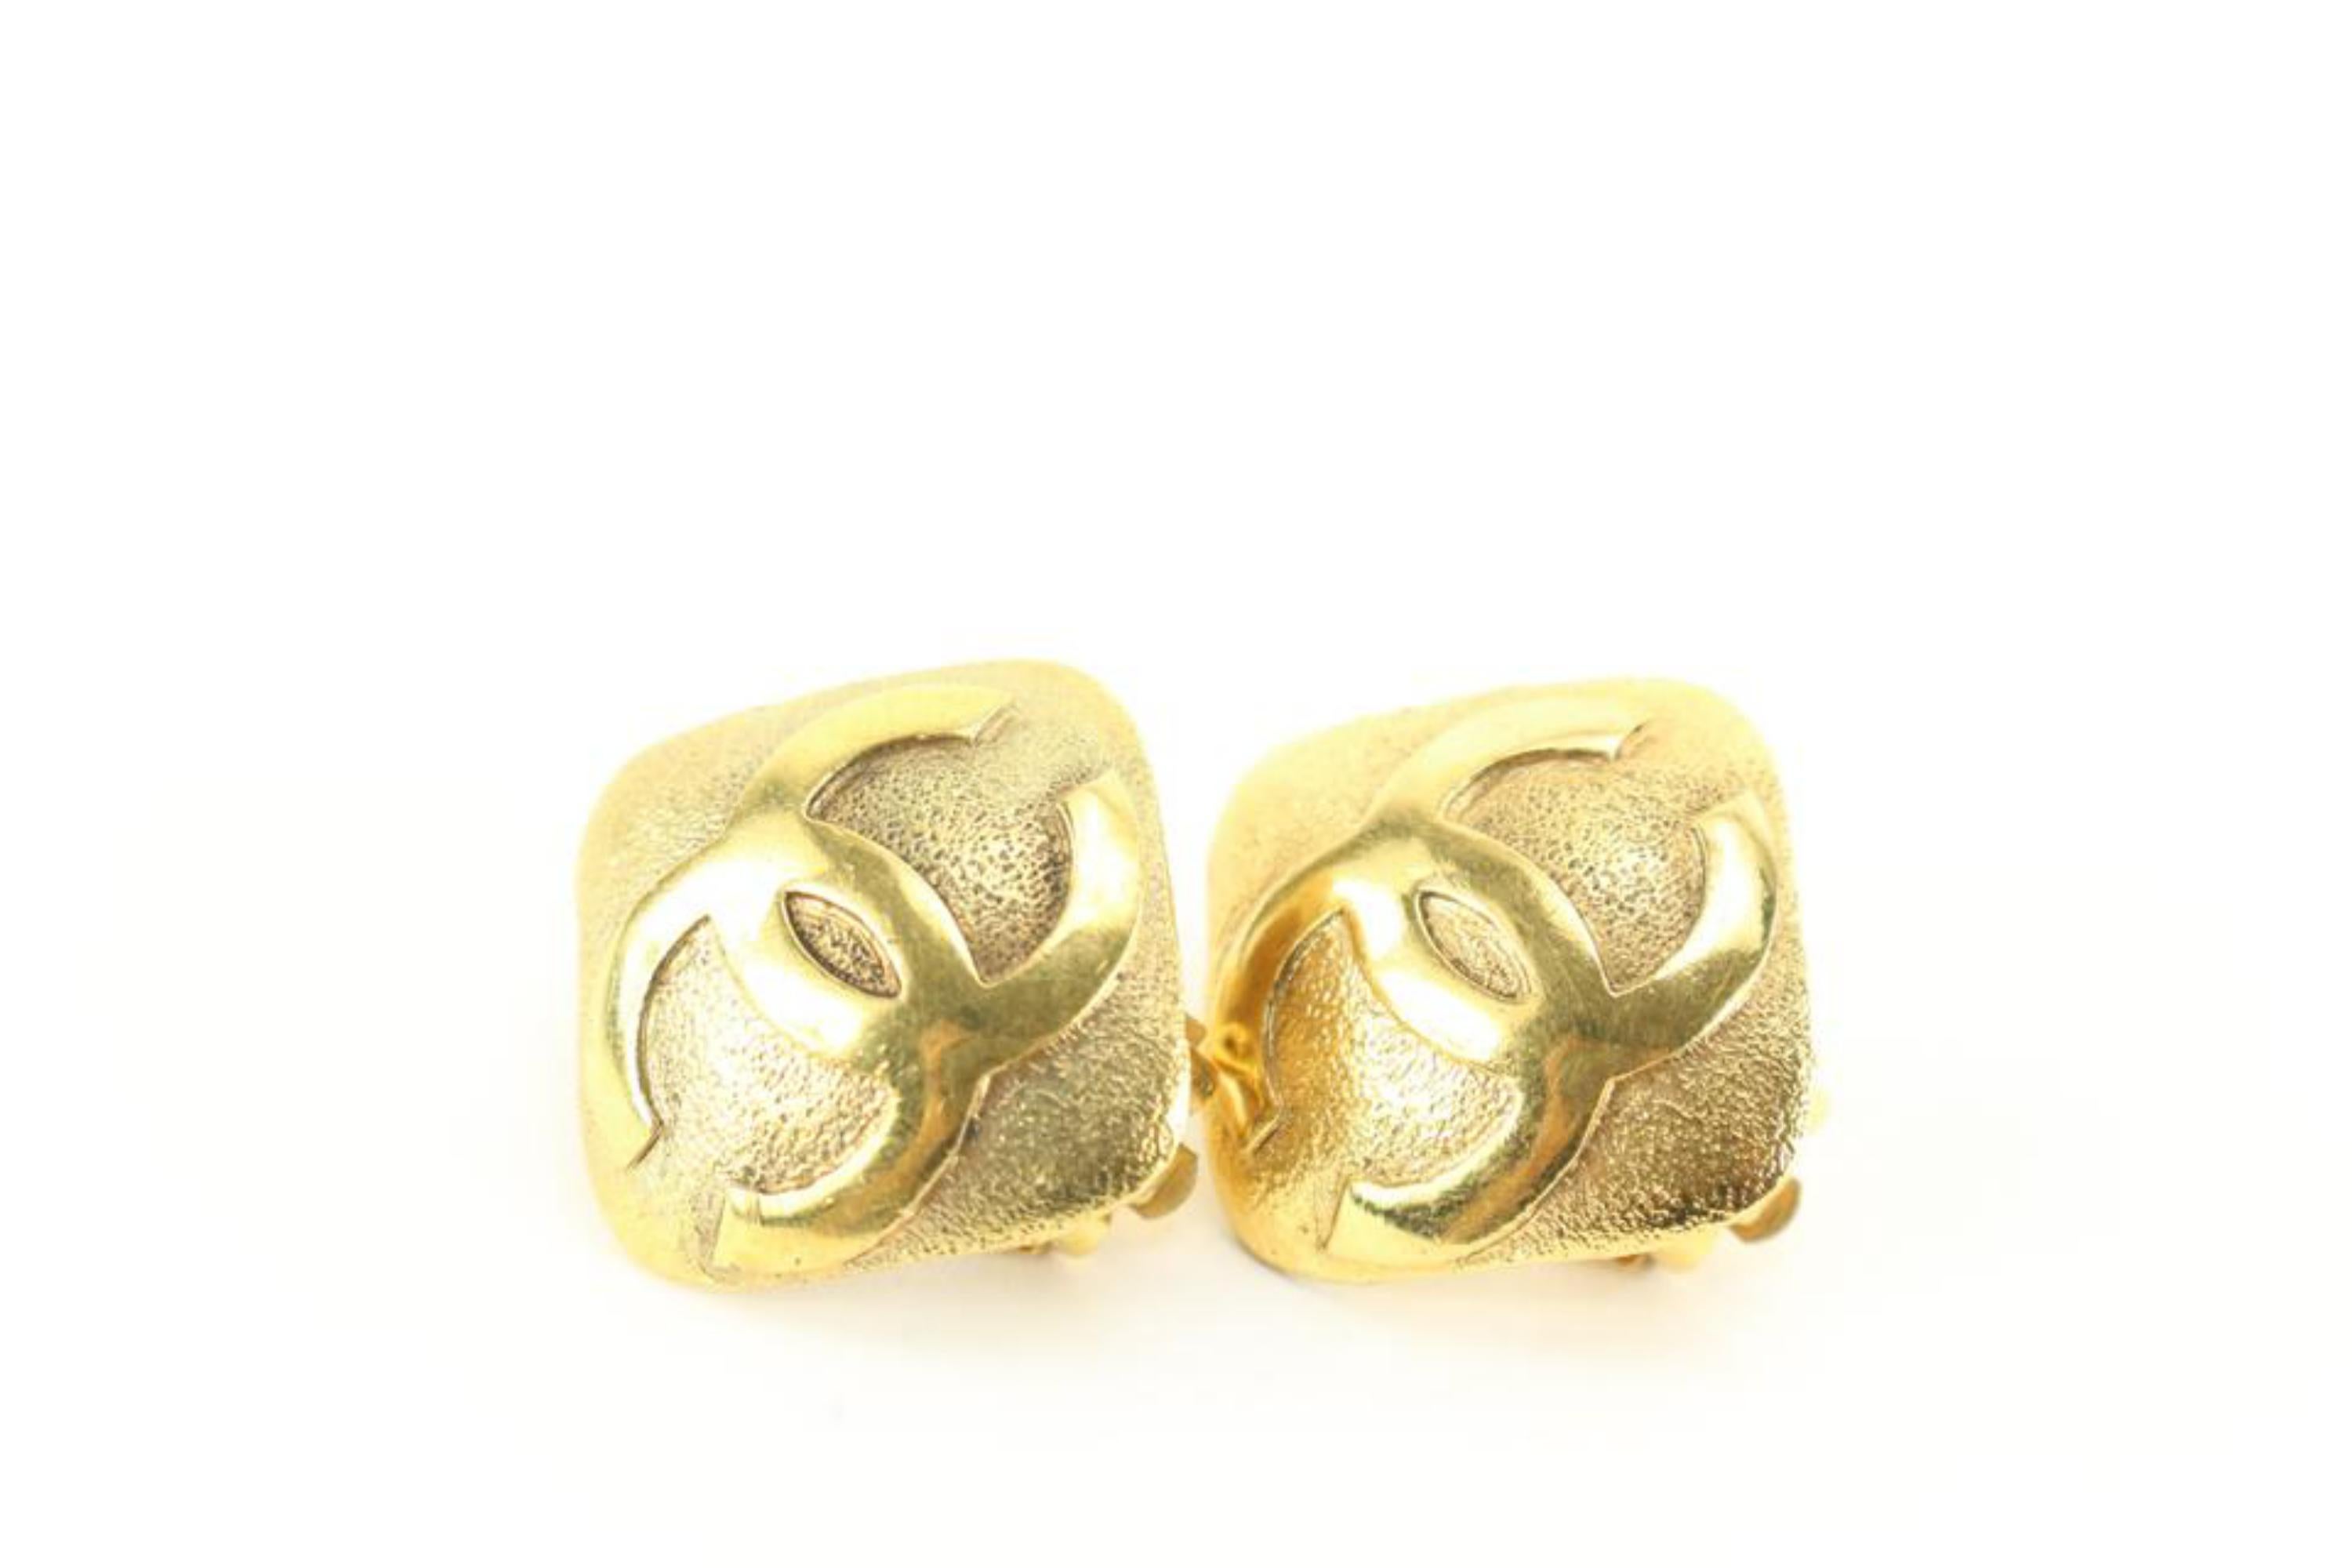 Chanel 29 Series Gold Plated CC Logo Square Diamond Shape Earrings 2cz616s 7